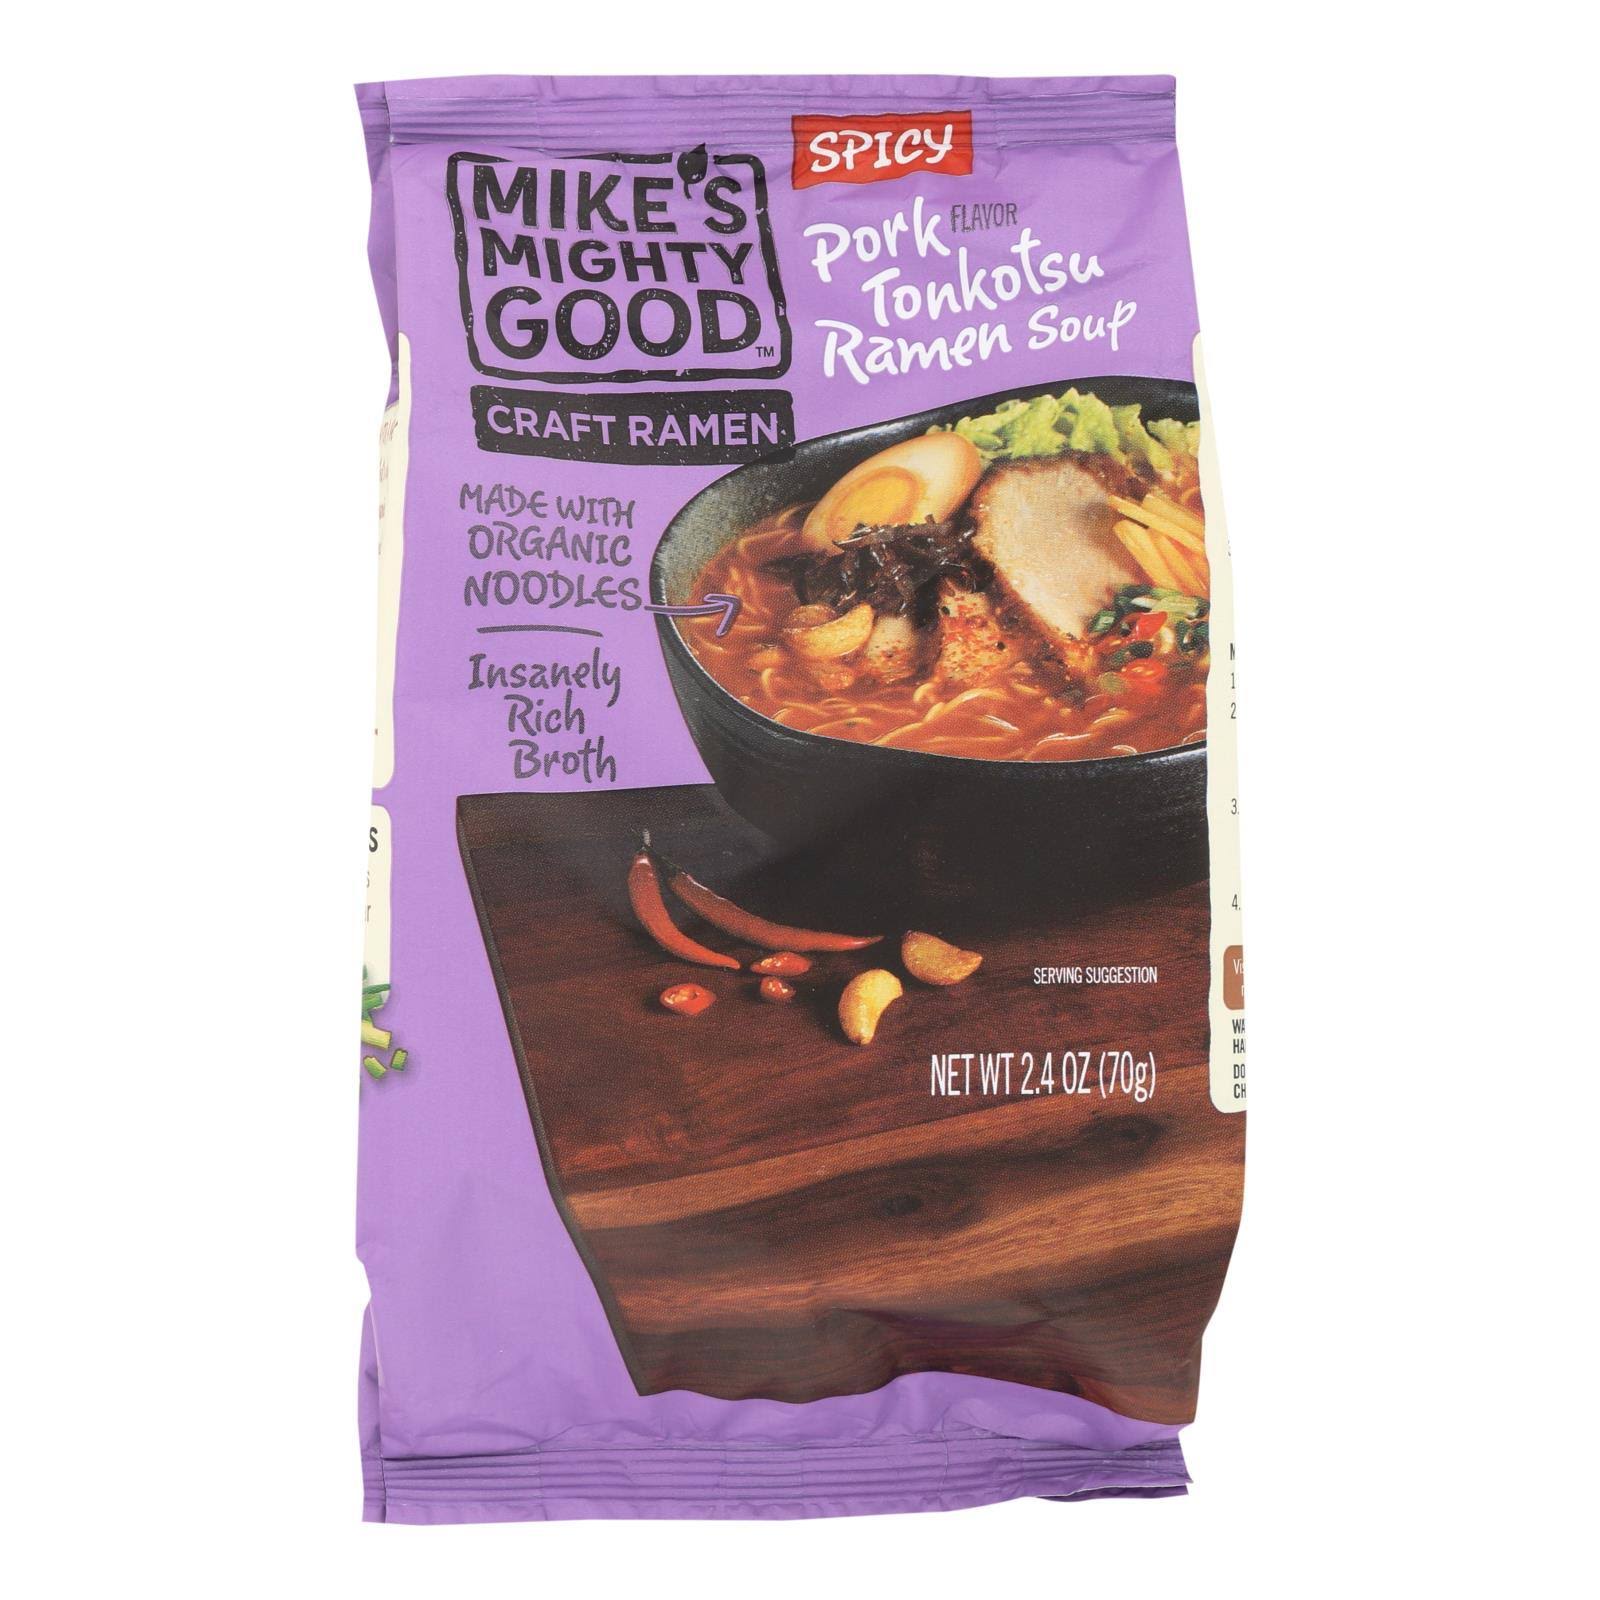 Mikes Mighty Good Ramen Soup, Pork Tonkotsu, Spicy - 2.4 oz